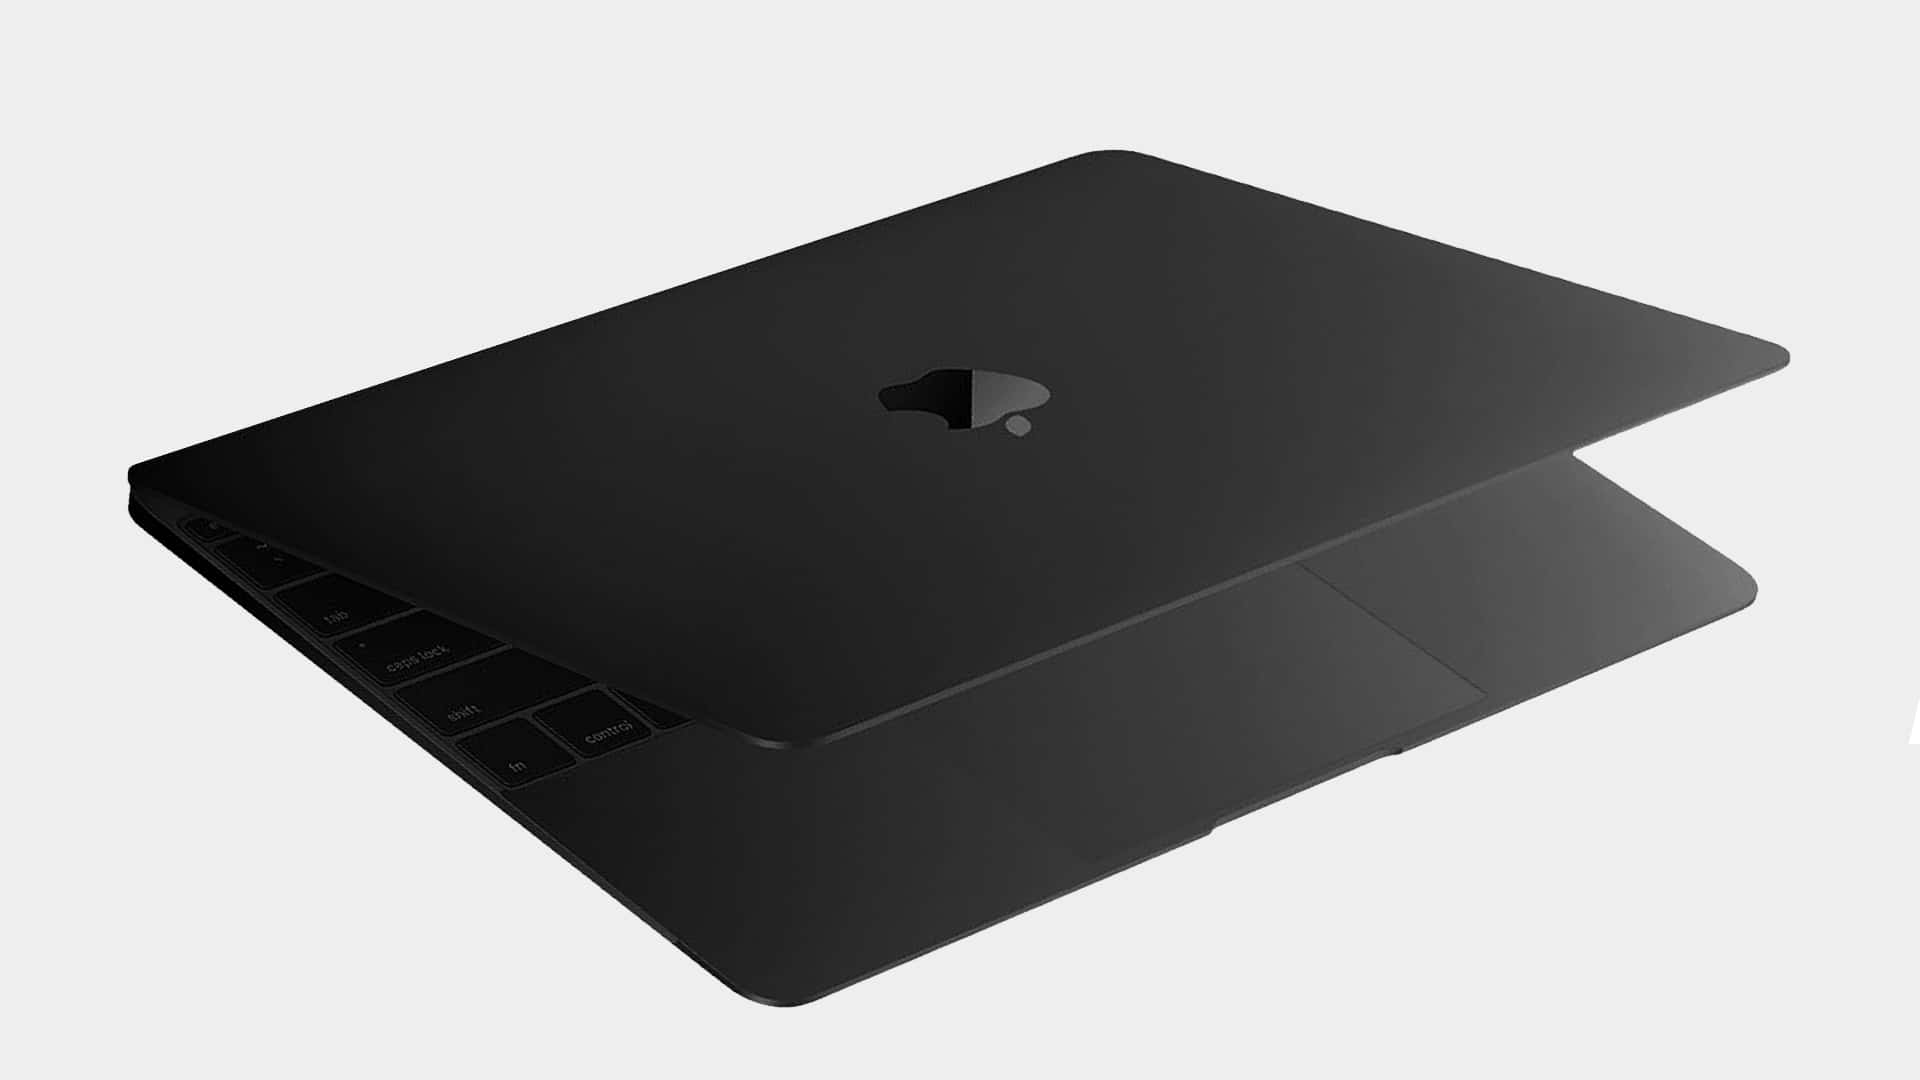 The sleek and stylish Black Macbook. Wallpaper